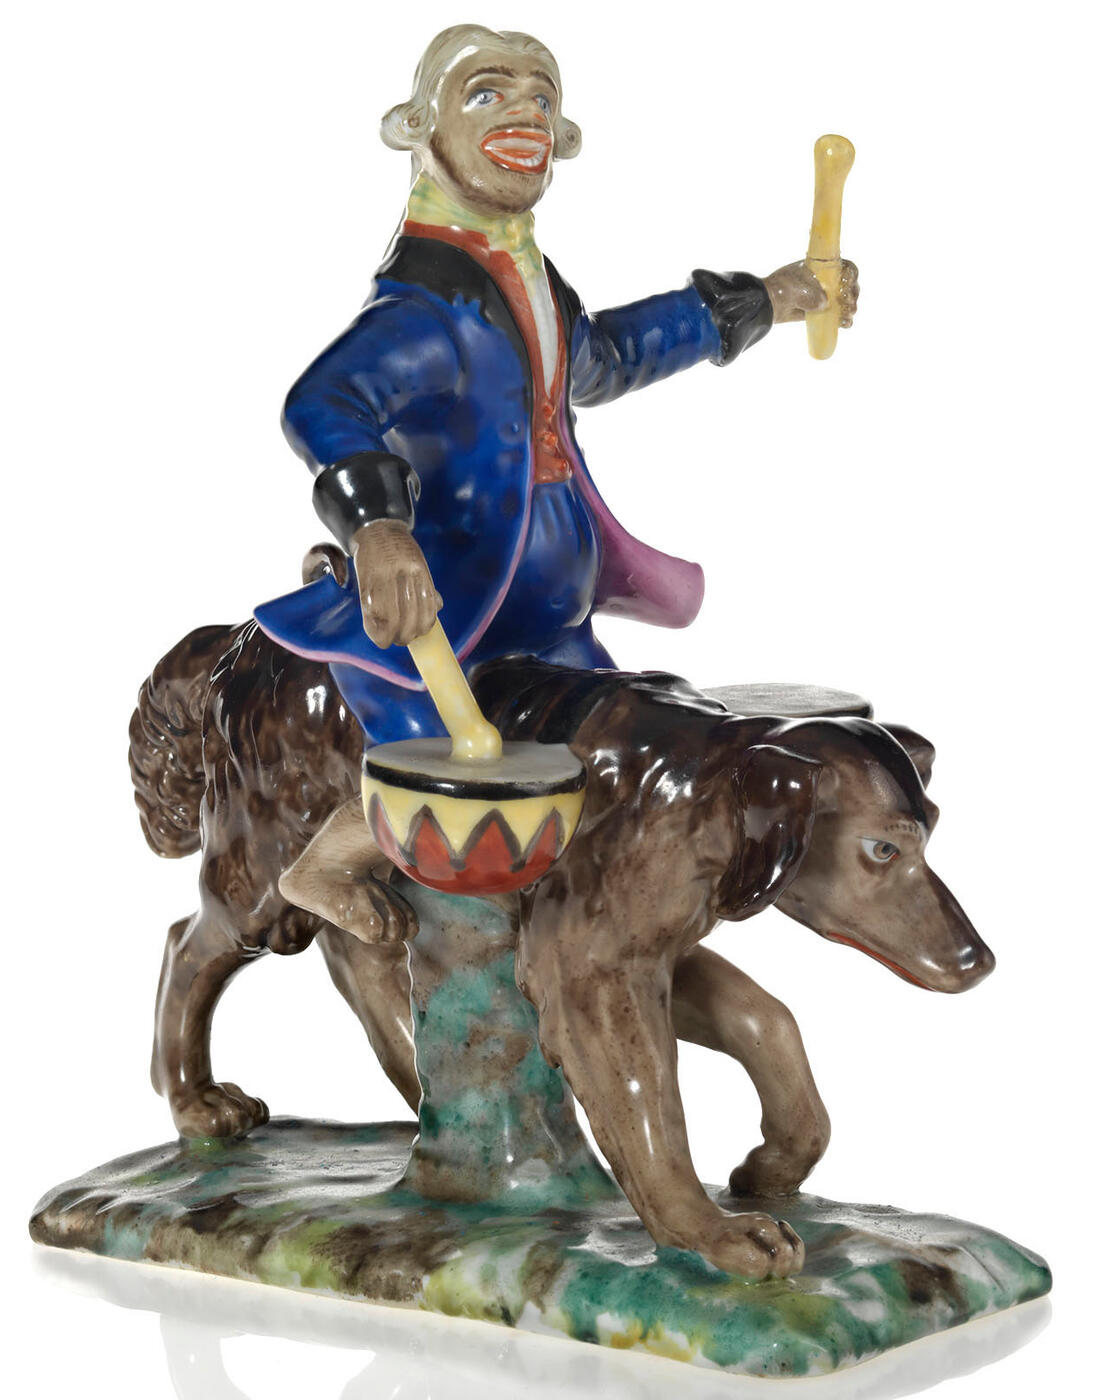 A Porcelain Figurine of a Monkey-Band Drummer